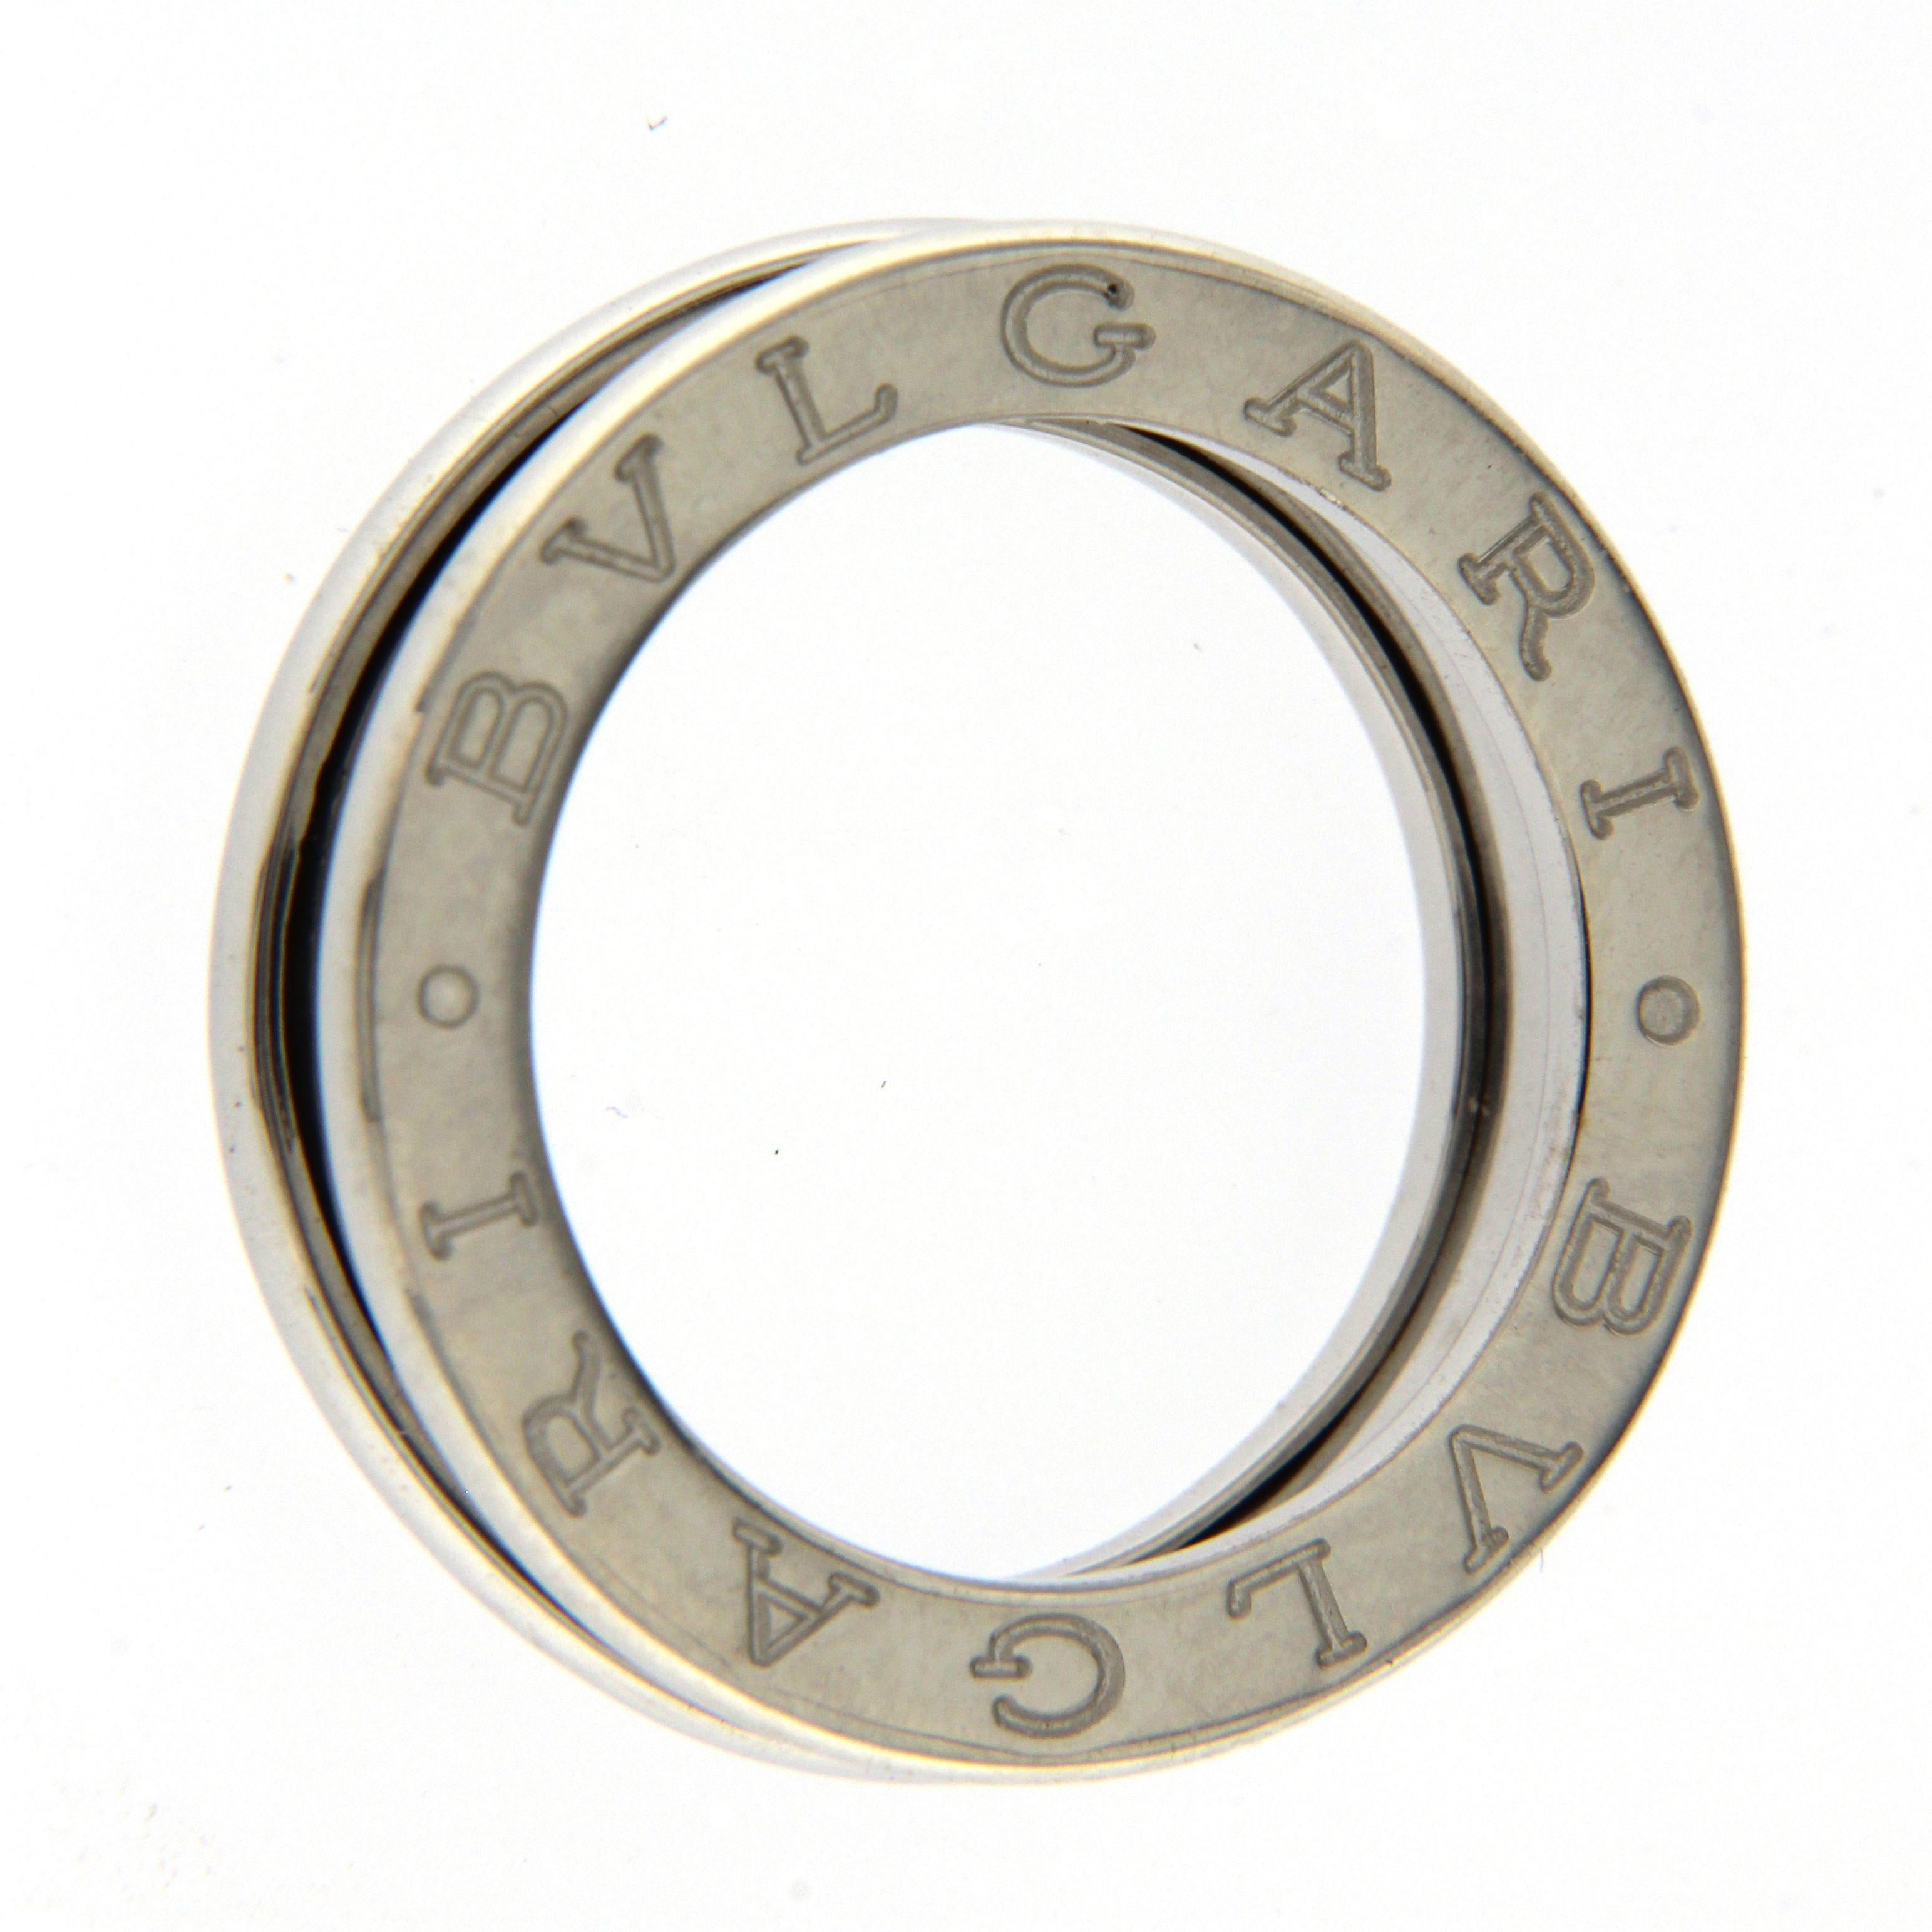 BZERO1 ring 18kt white gold       size 54       1 Band